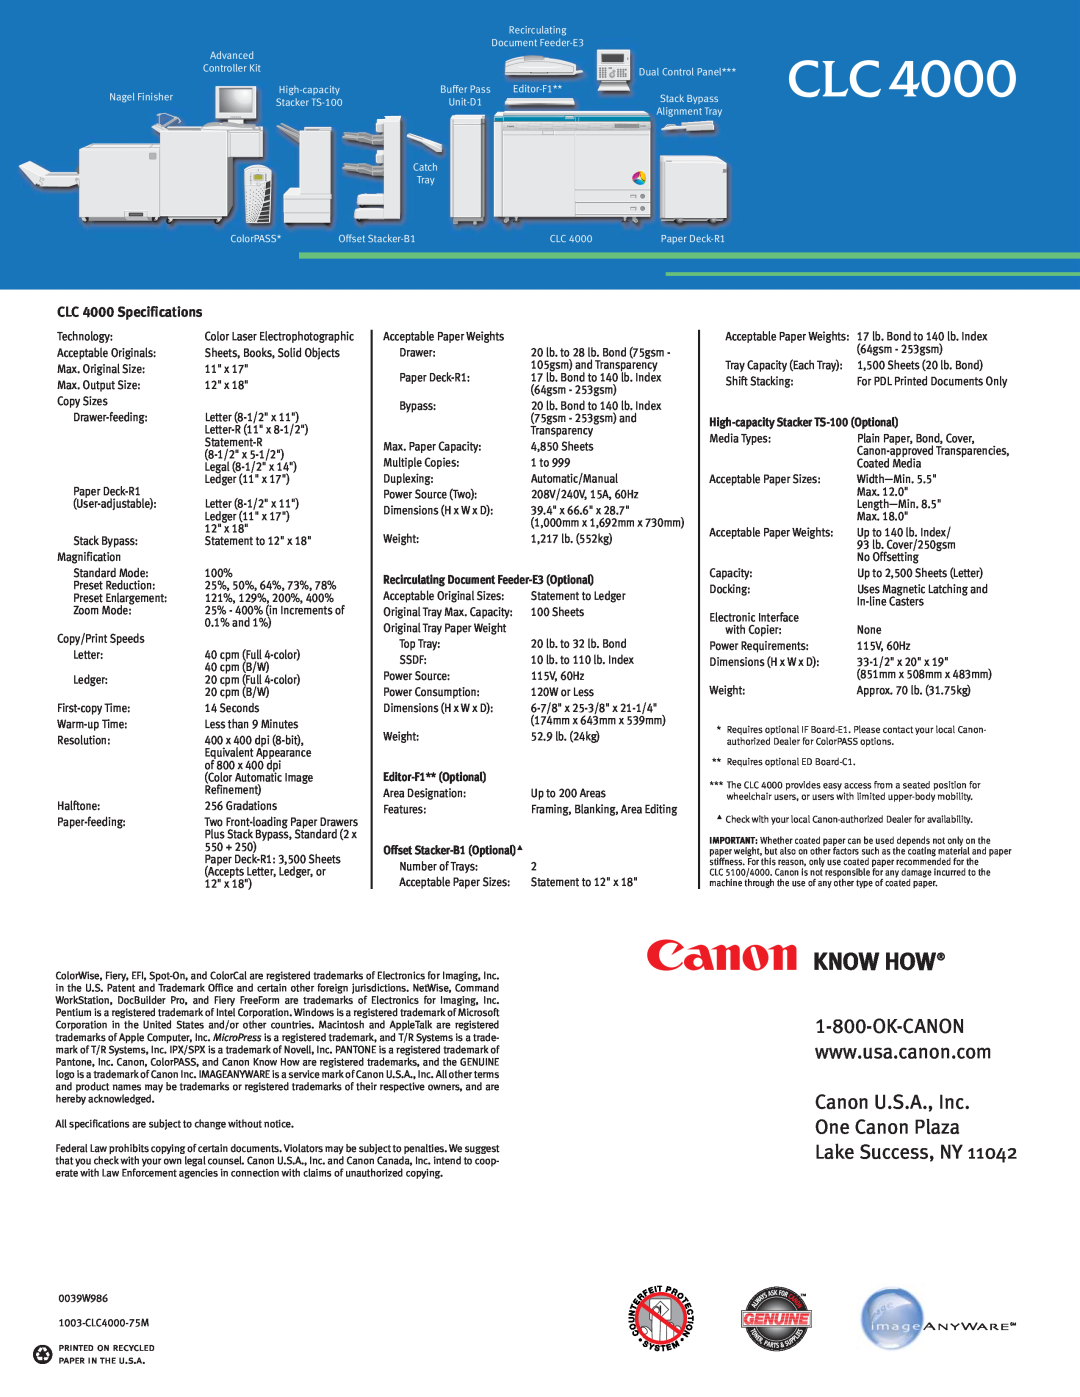 Cannon manual Canon U.S.A., Inc One Canon Plaza Lake Success, NY, CLC 4000 Specifications, Editor-F1** Optional 